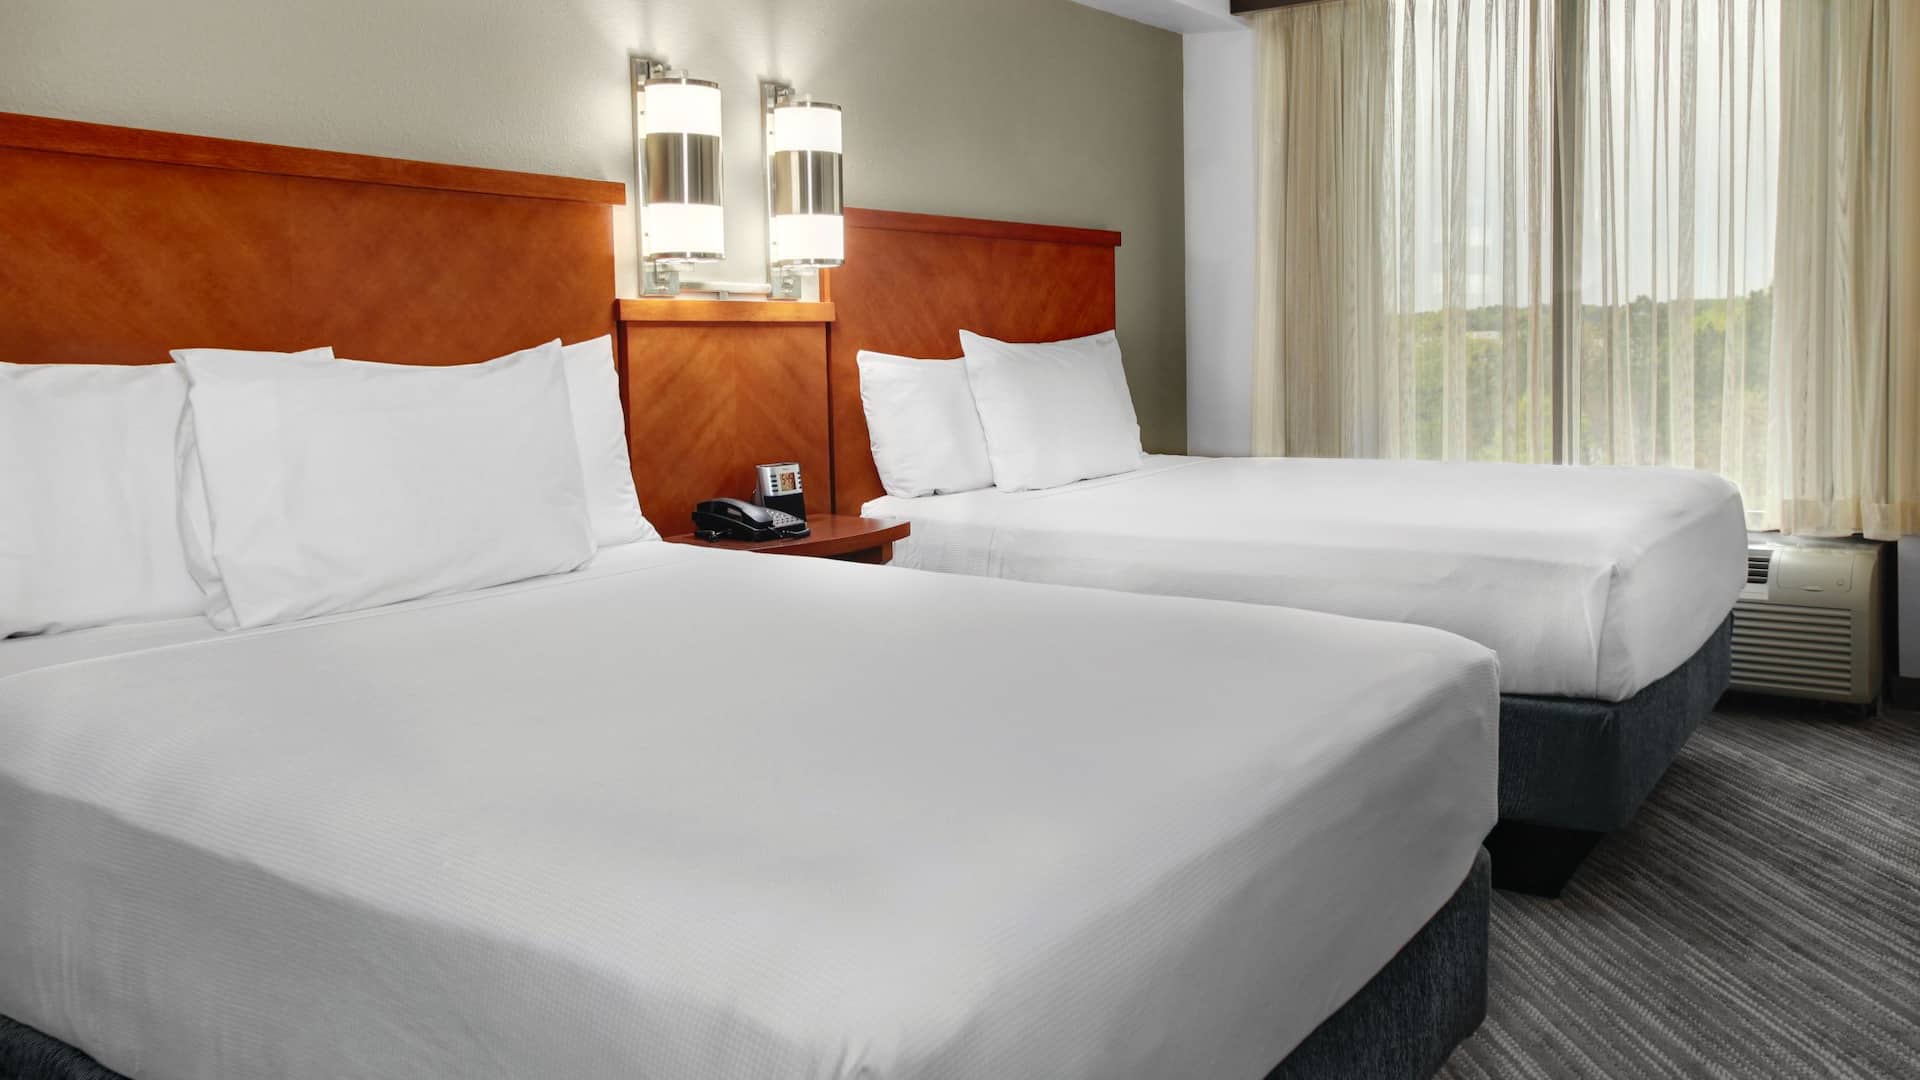 Secaucus hotel guestroom double queen-sized beds at Hyatt Place Secaucus / Meadowlands